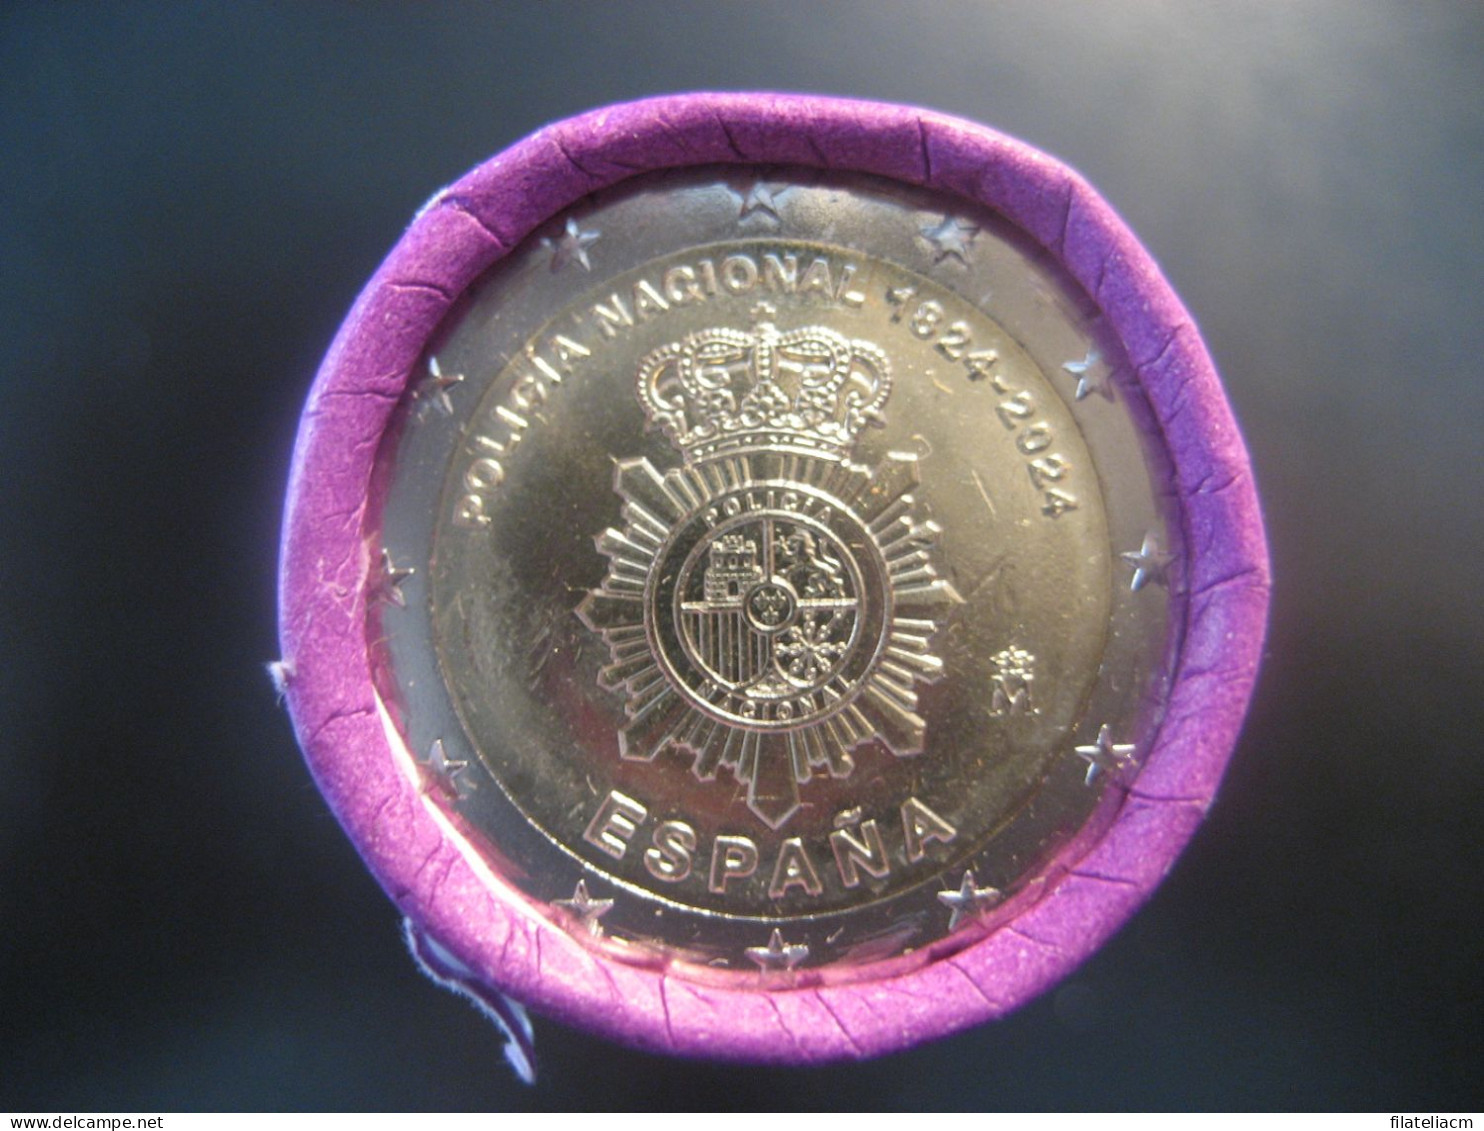 2 EUR 2024 SPAIN Policia Nacional POLICE Uncirculated From Cartridge Euro Coin - Spain